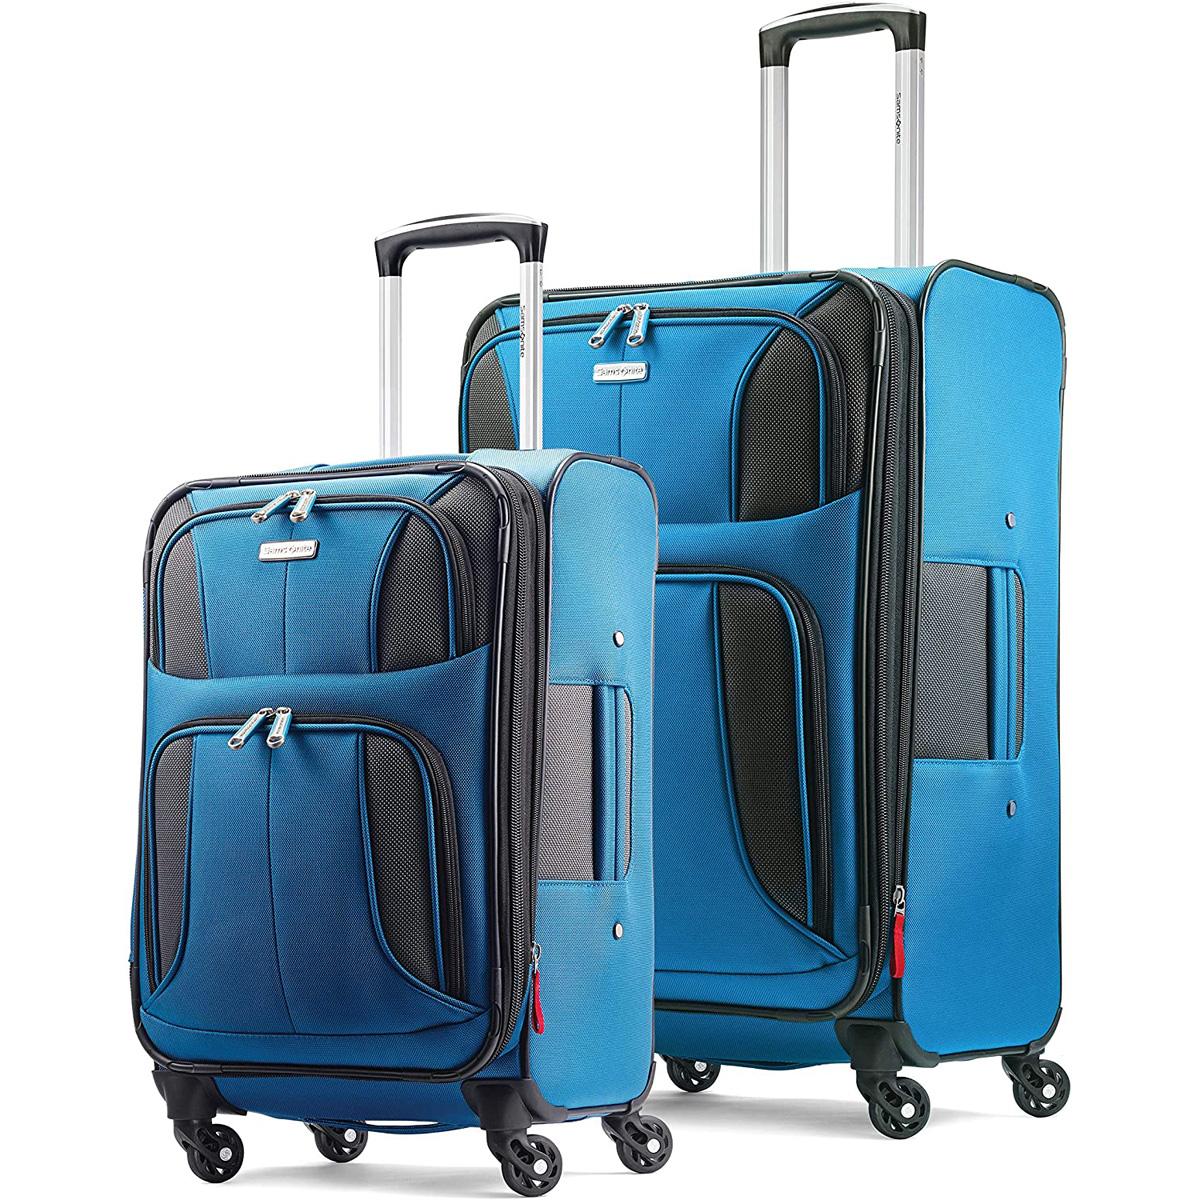 Samsonite Aspire Xlite Softside Luggage with Spinner Wheels Deals